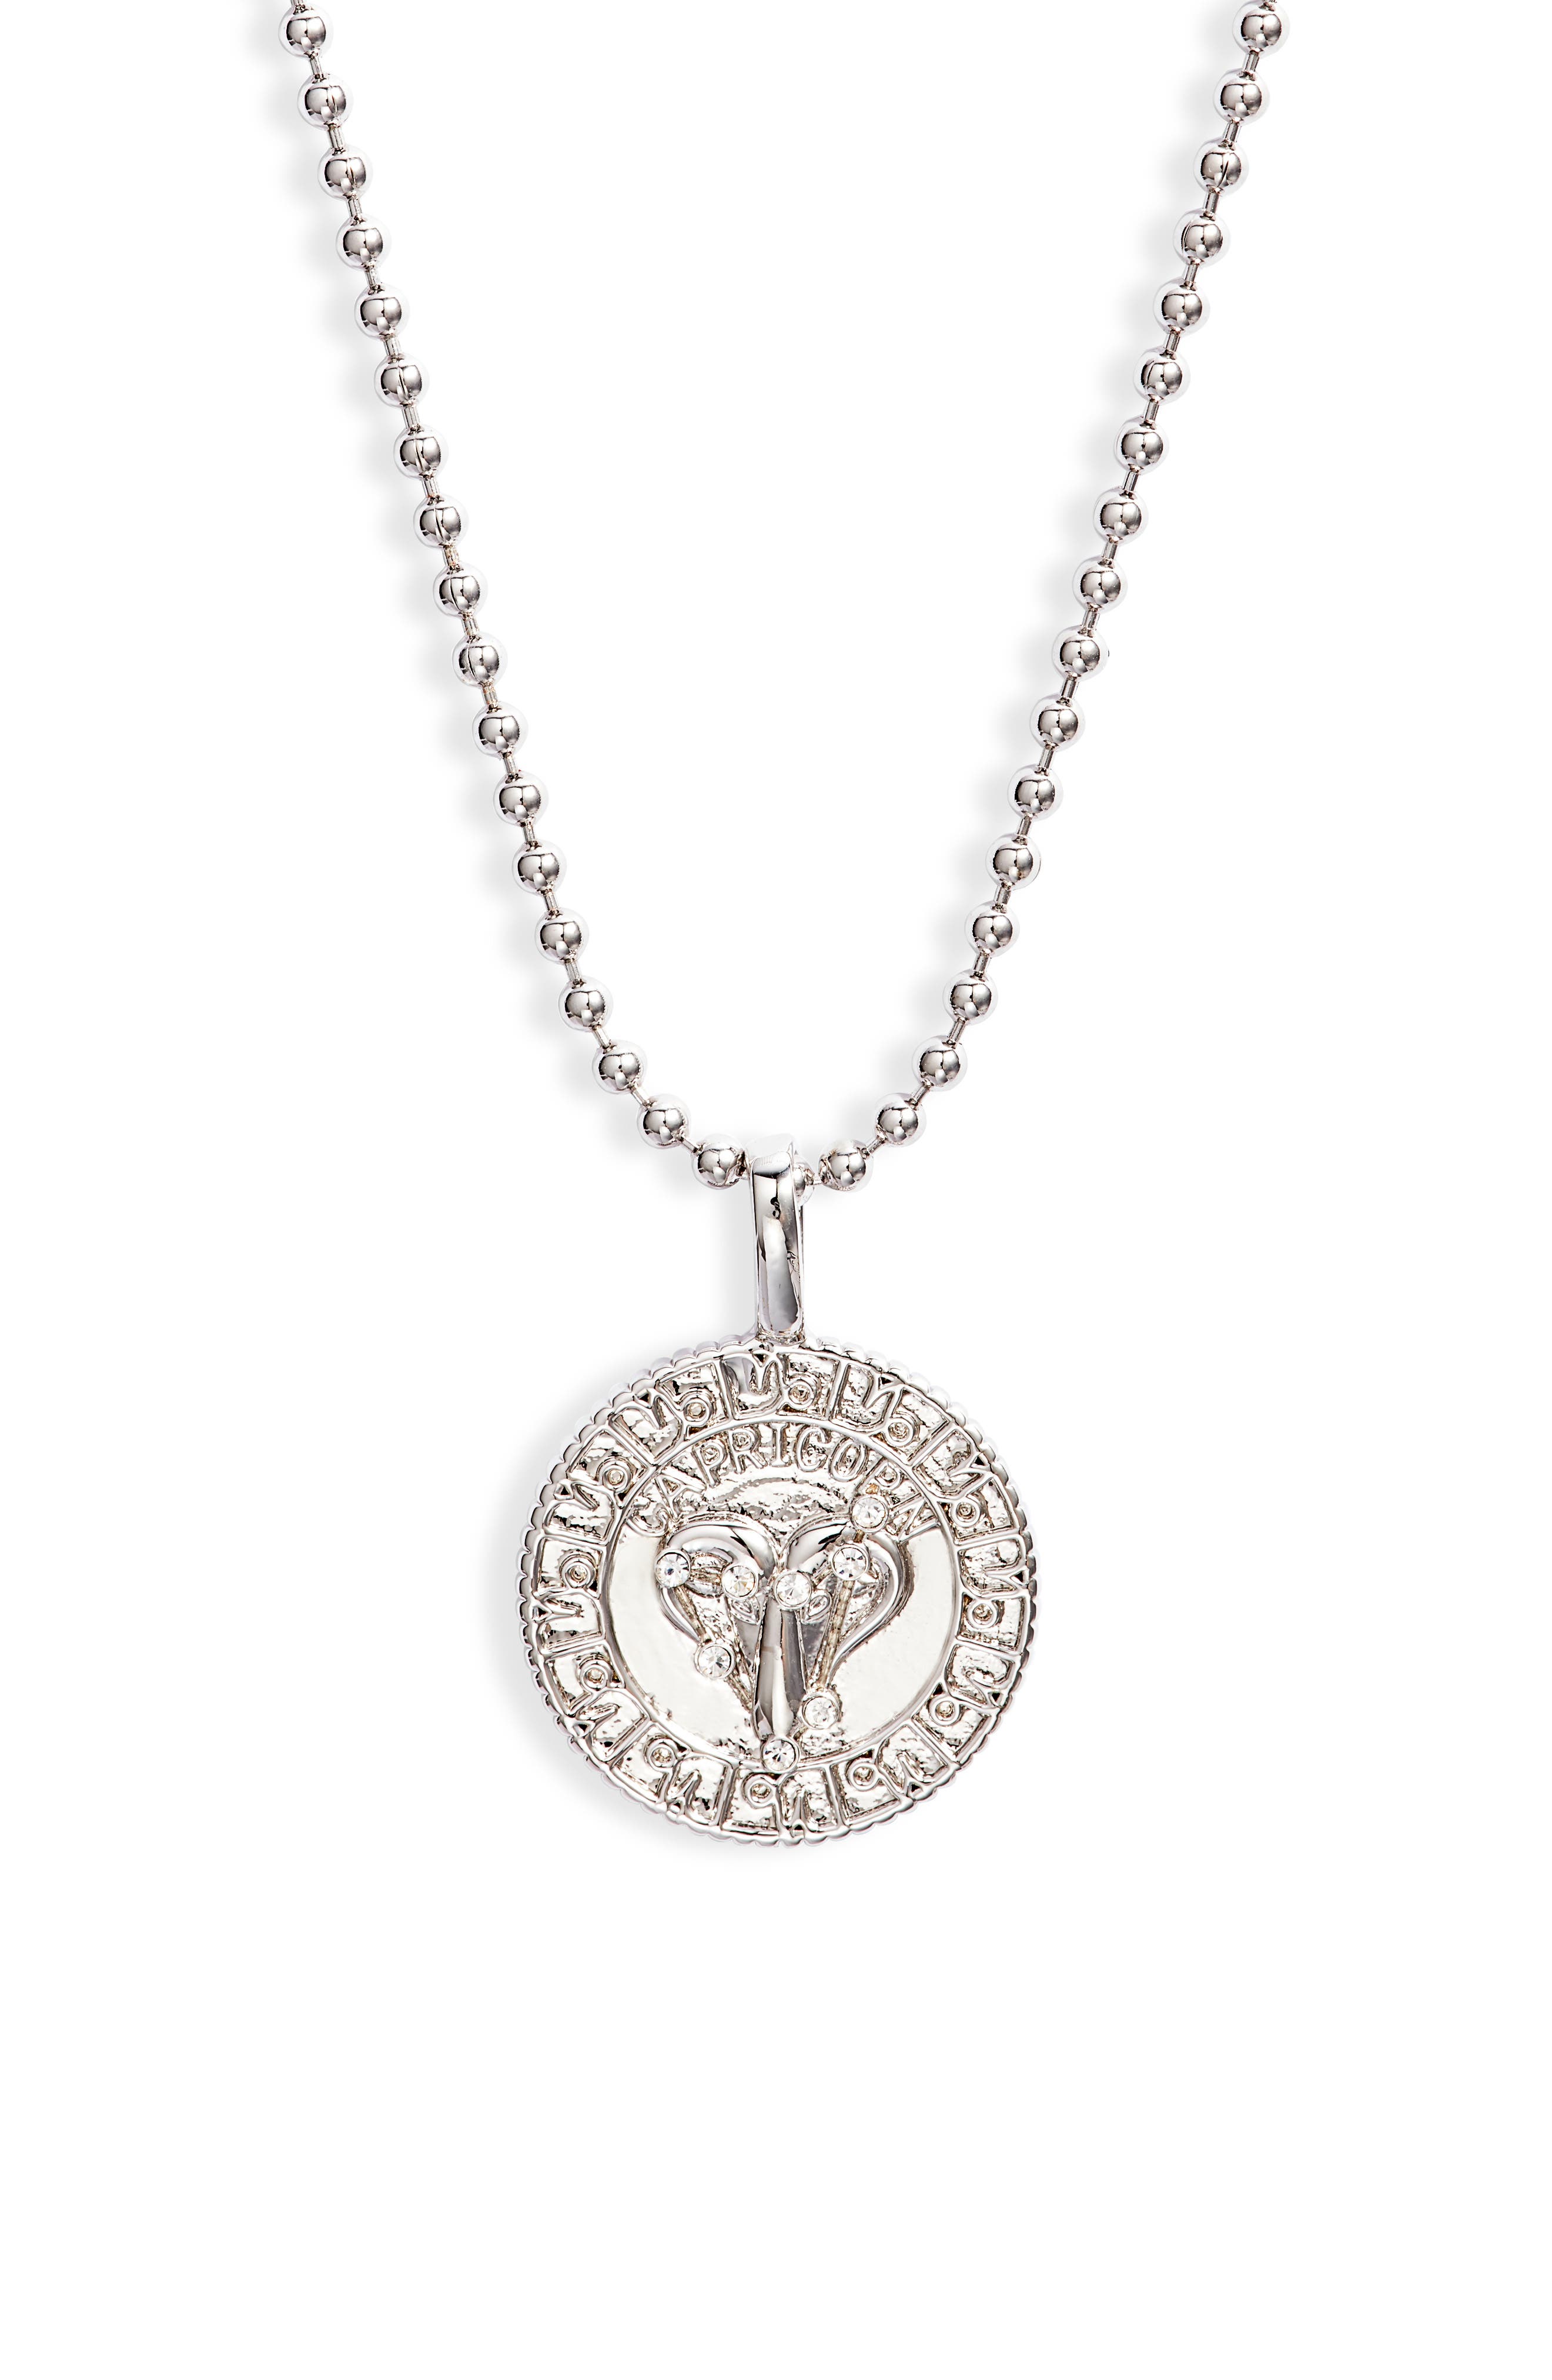 Melinda Maria Zodiac Pendant Necklace In Silver- Taurus